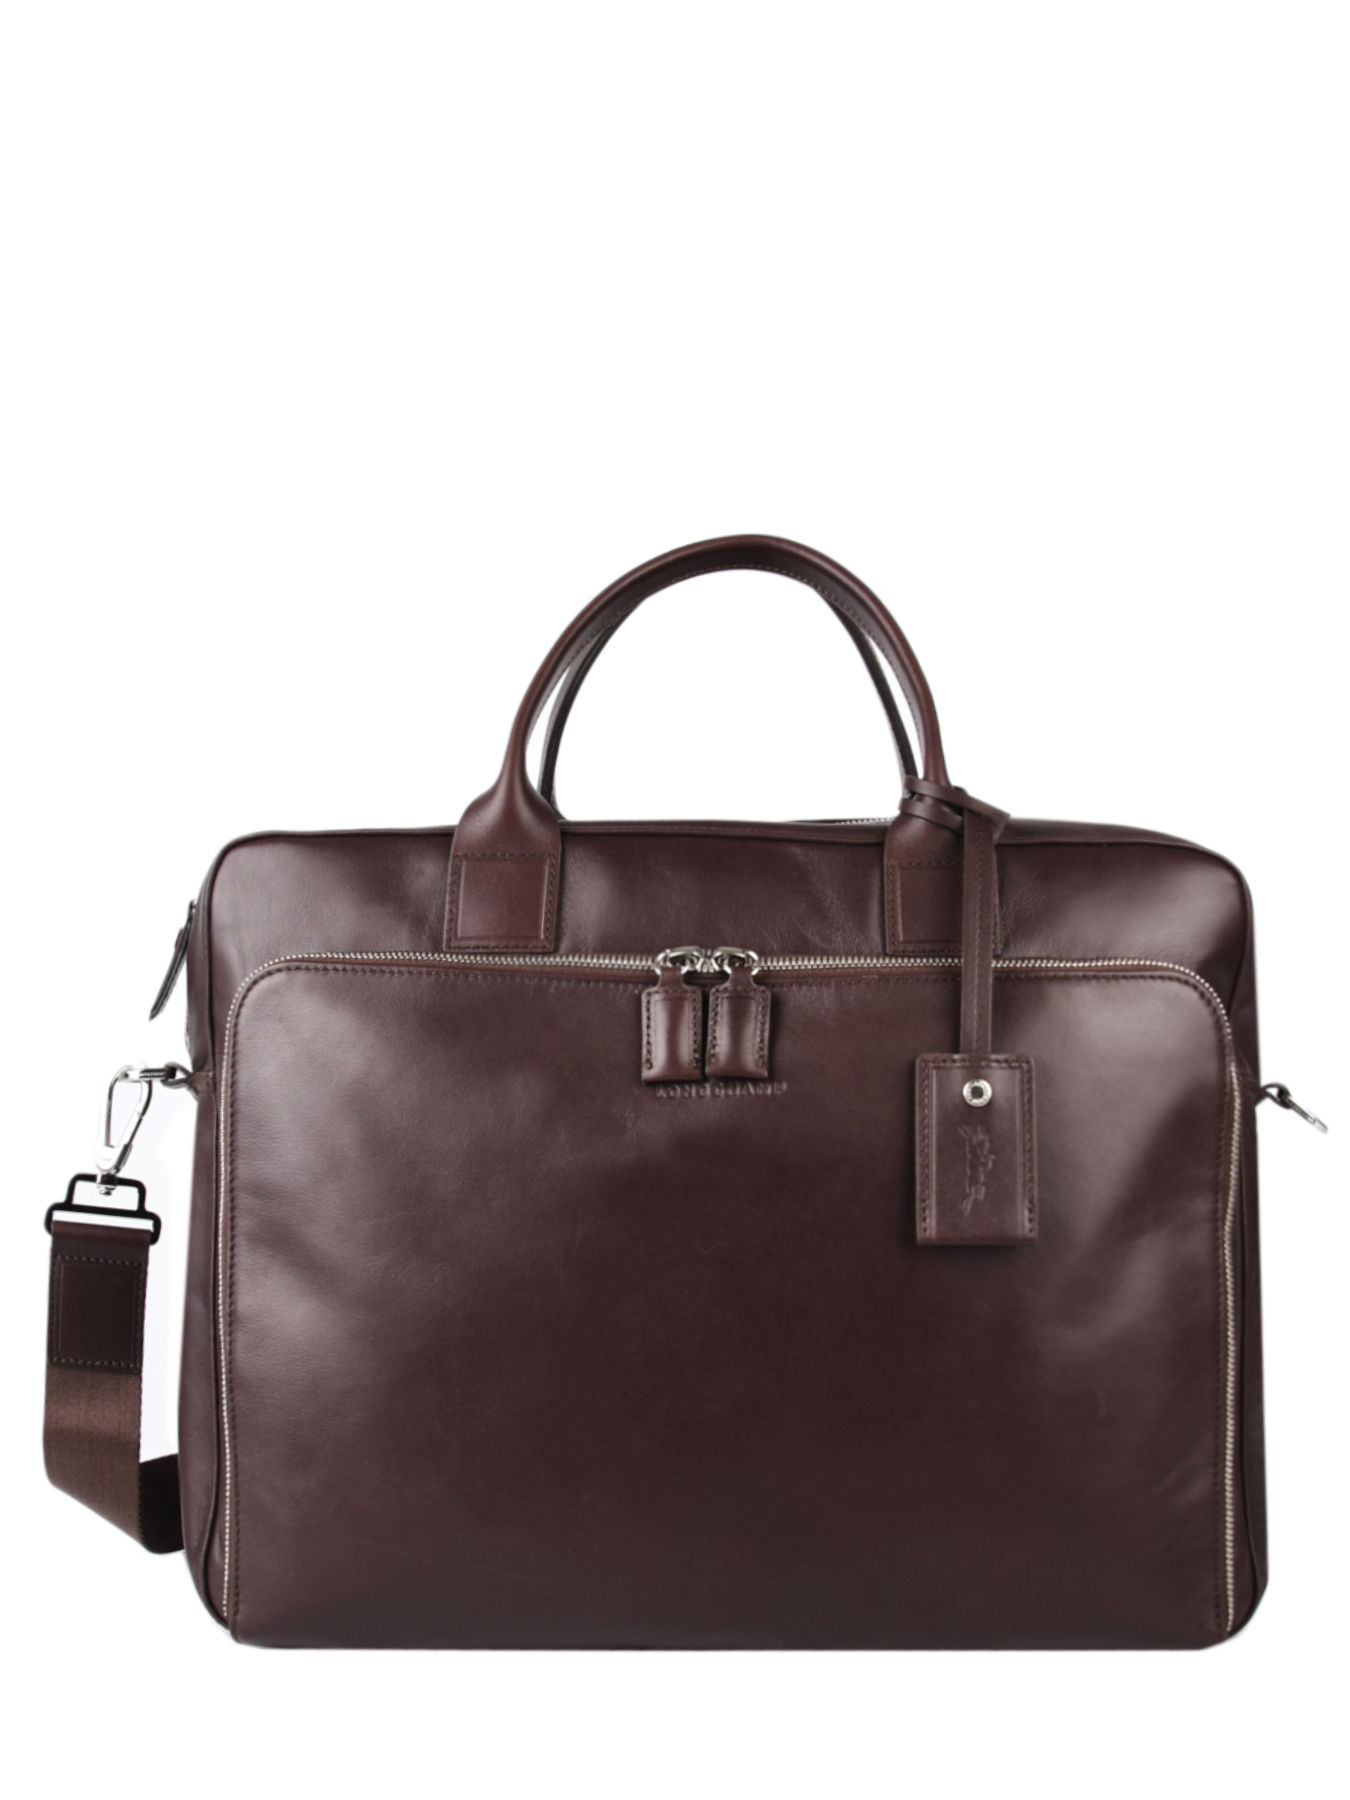 Longchamp Briefcase 2161966 - best prices